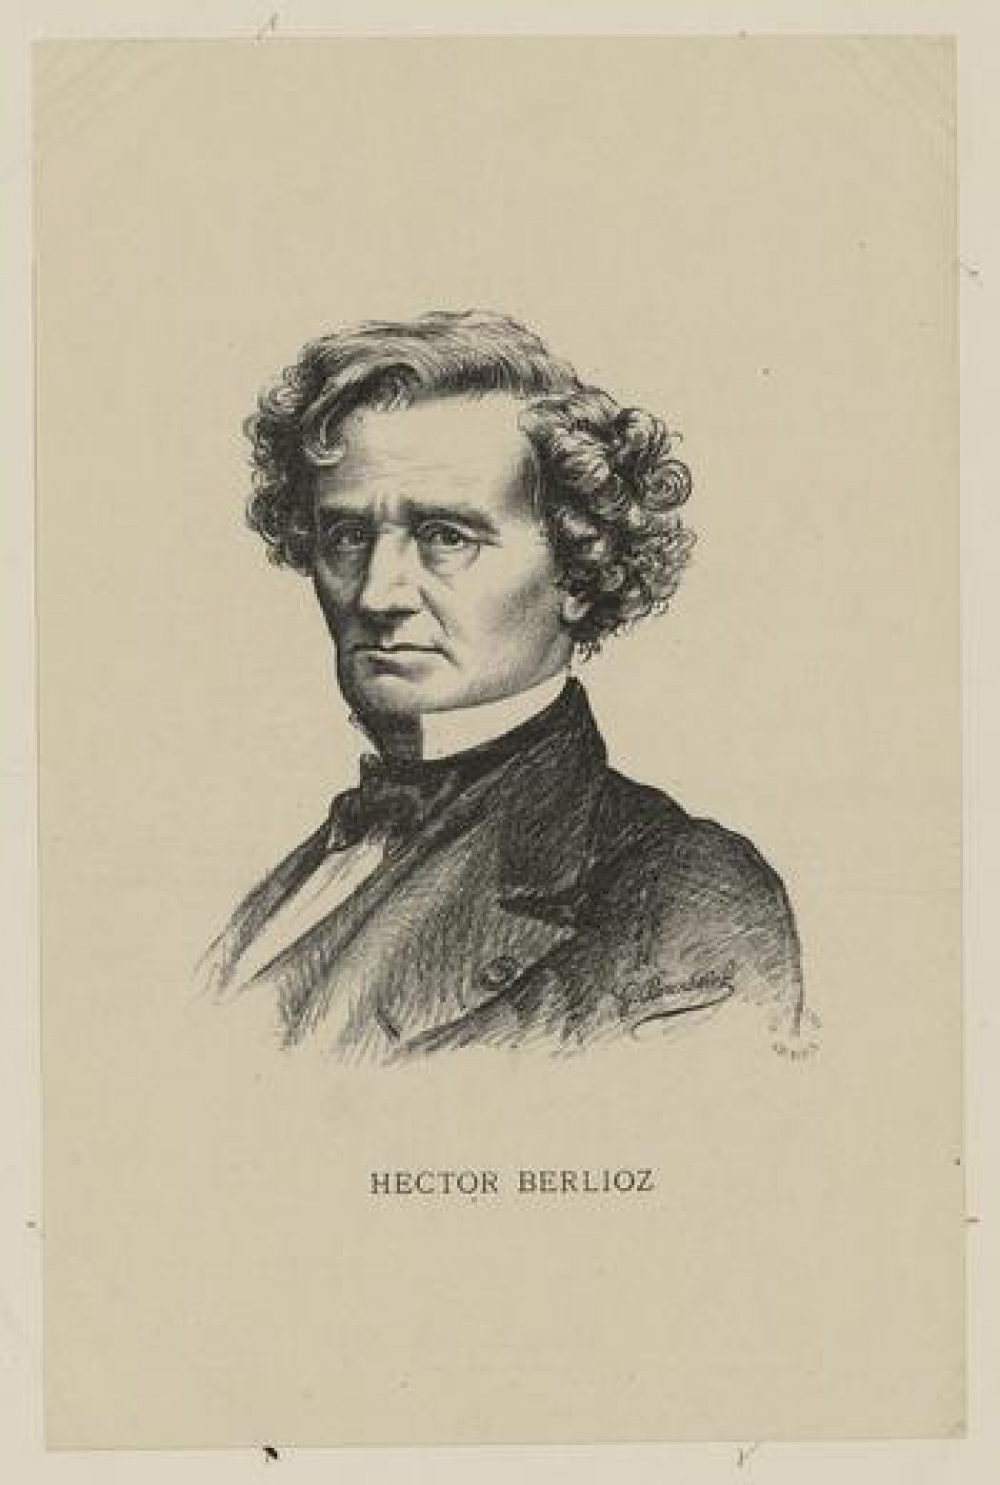 Hector Berlioz, estampe de Brunswick, G.
               graveur (cote Pd.1 Berlioz (Hector) (29)) ©Bibliothèque municipale, ville de Grenoble